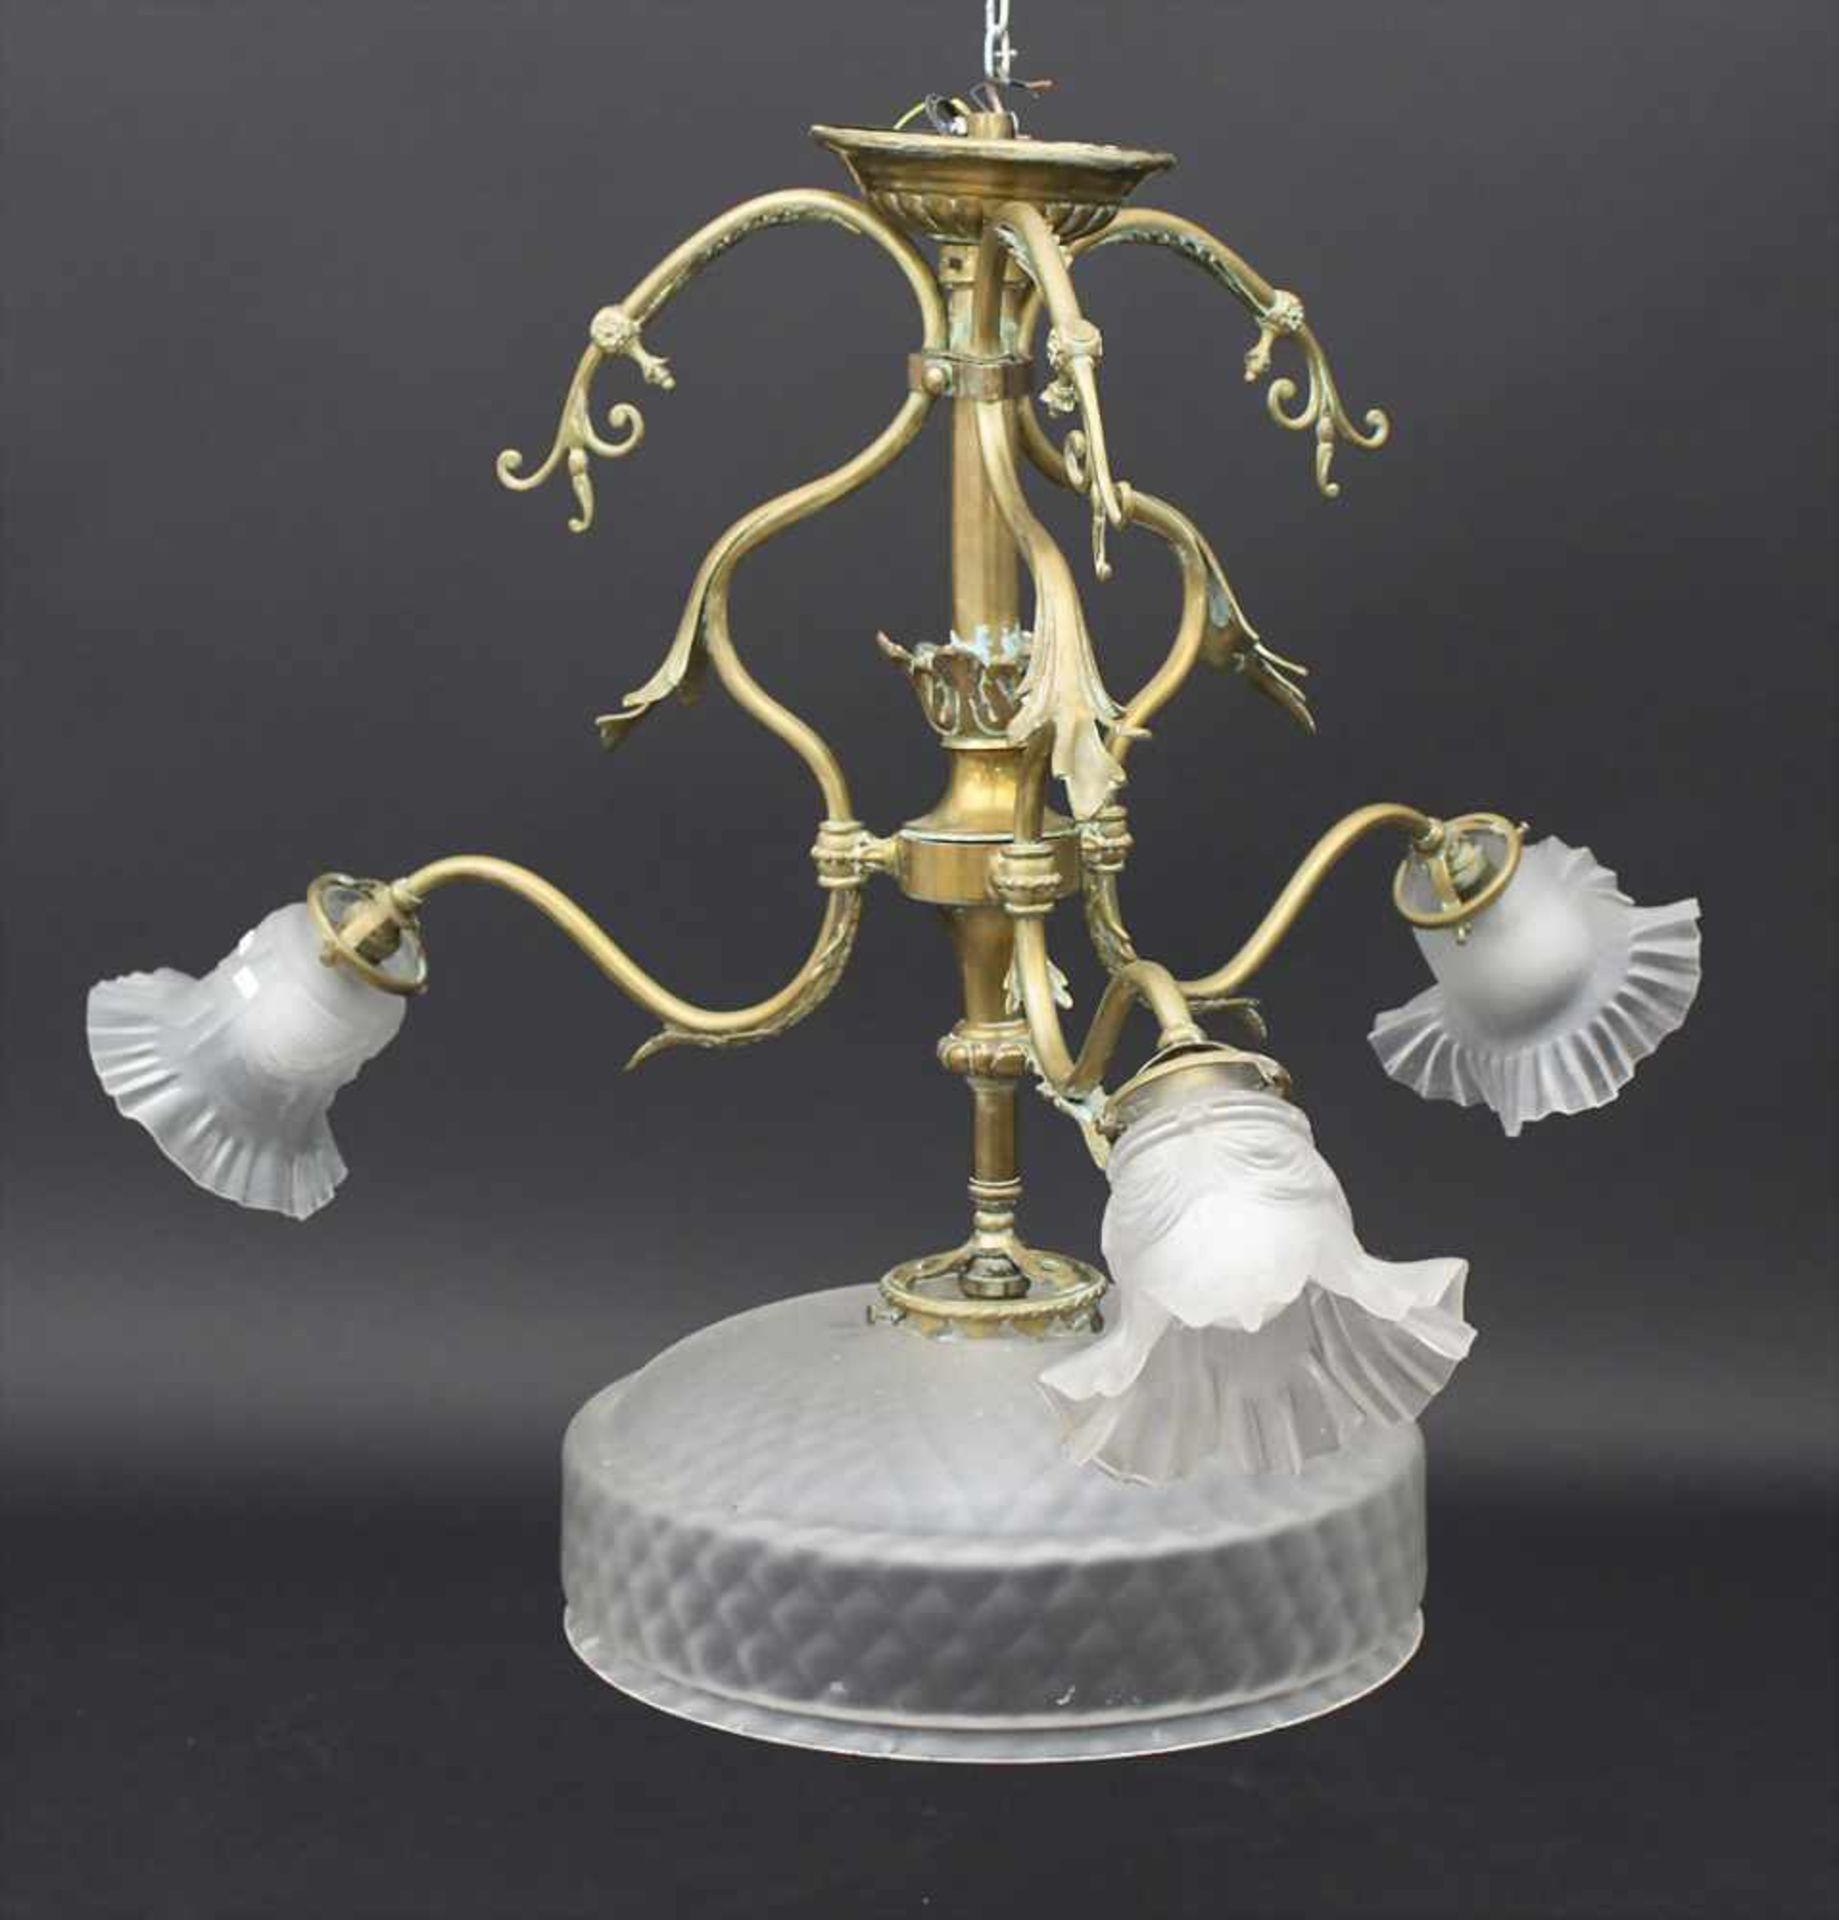 Deckenlampe / A ceiling lamp, um 1900Material: Bronze, satinierte Glasschirme, 4-lichtig, - Image 2 of 5